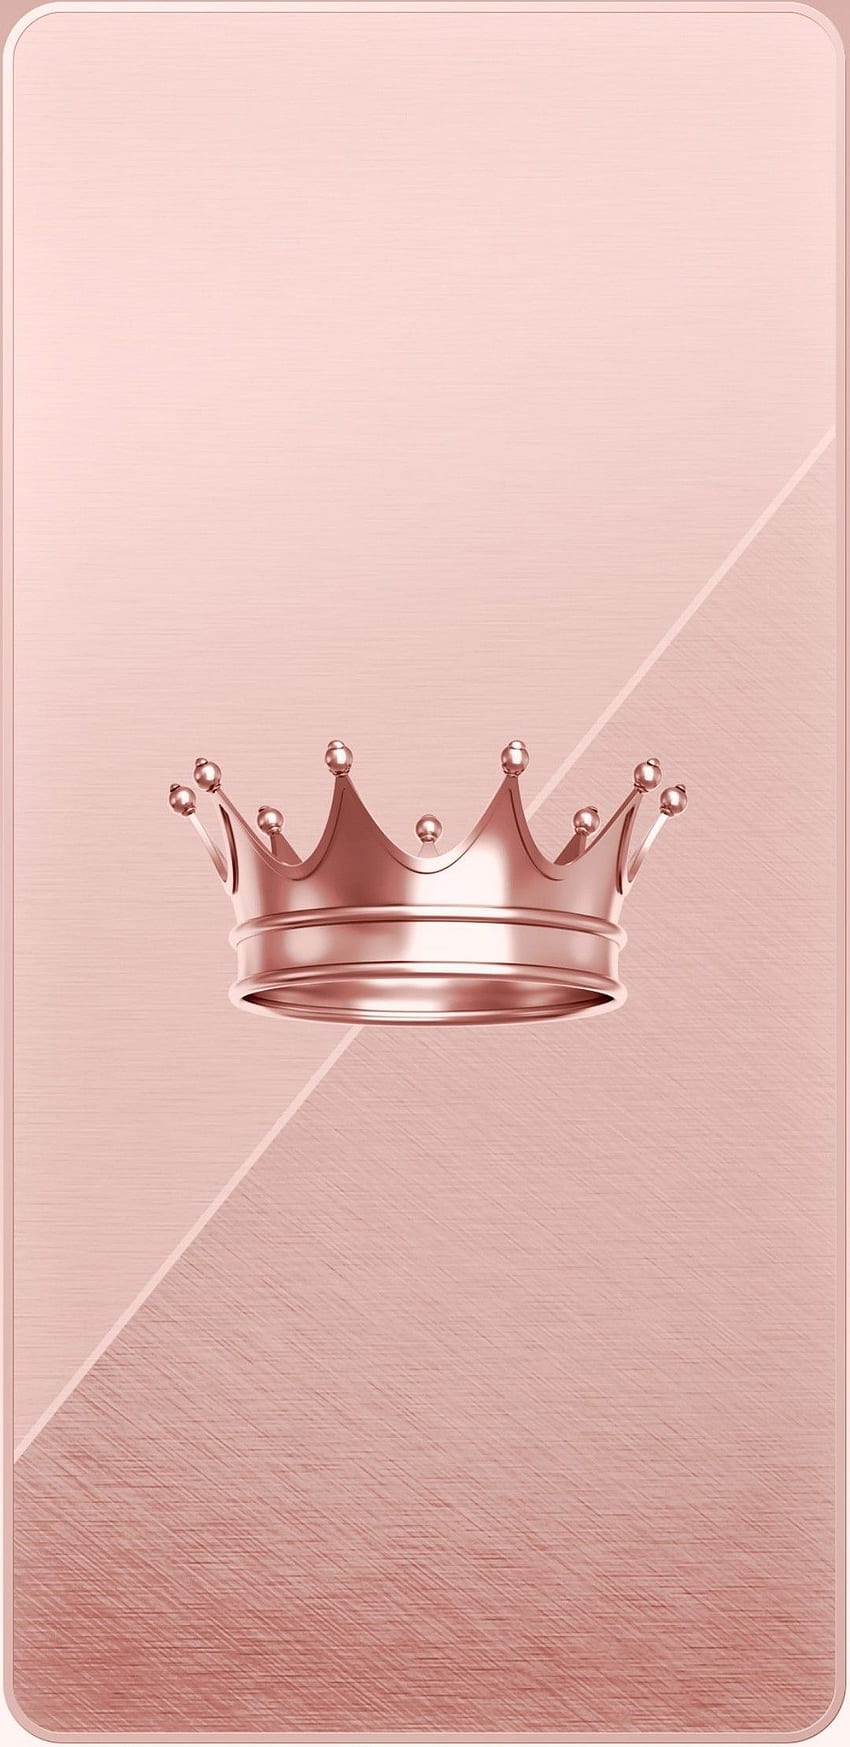 Corona iPhone, Reina Corona fondo de pantalla del teléfono